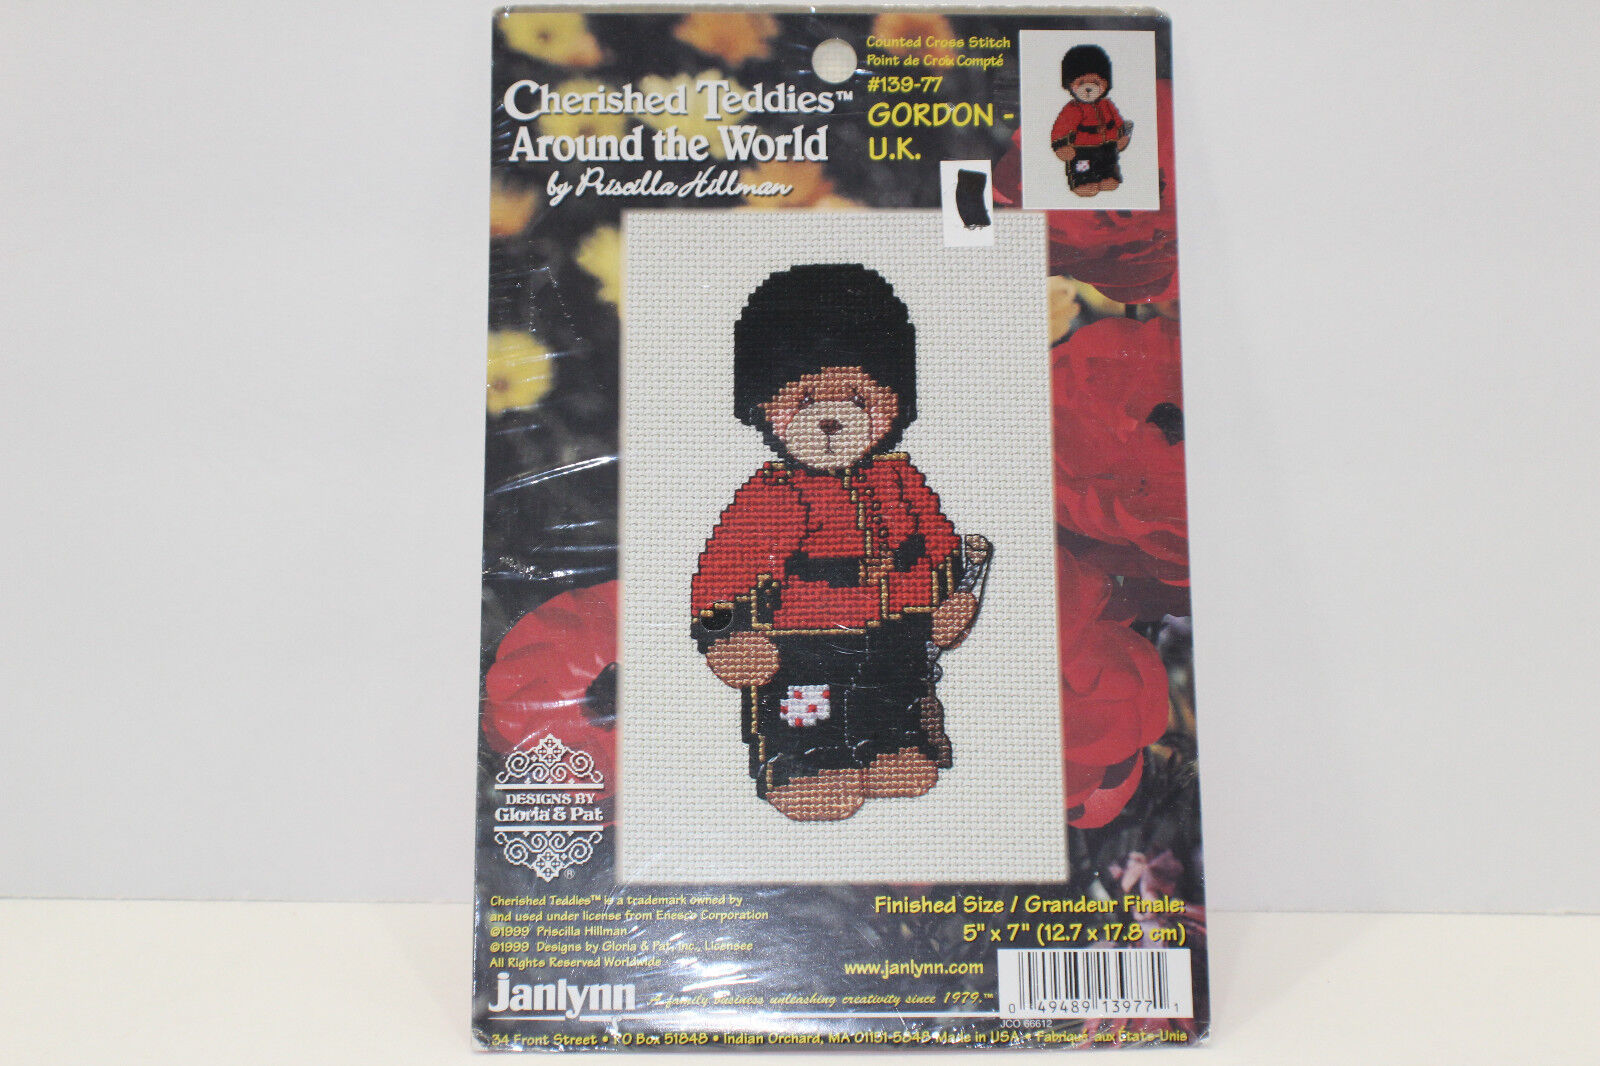 NEW JANLYNN Cherished Teddies Around The World Cross Stitch Kit GORDON UK139-77